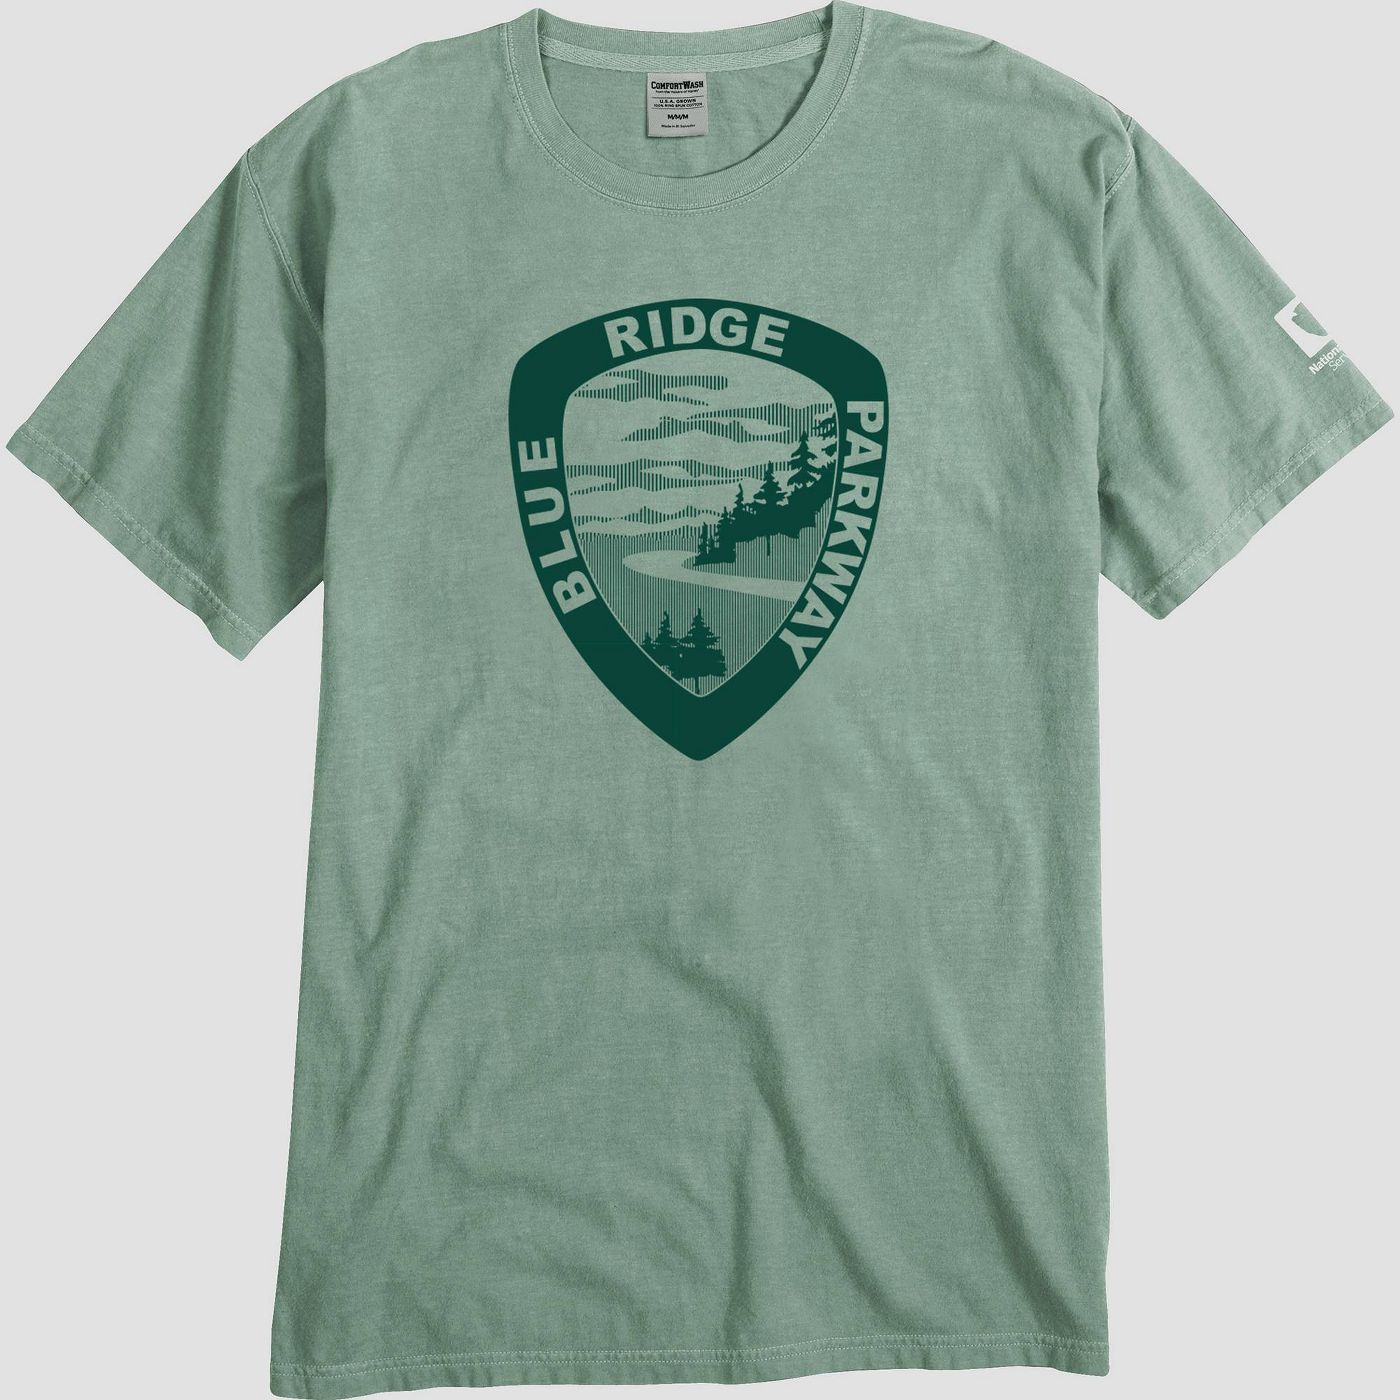 Hanes Men's Short Sleeve National Parks Service T-Shirt - image 3 of 3